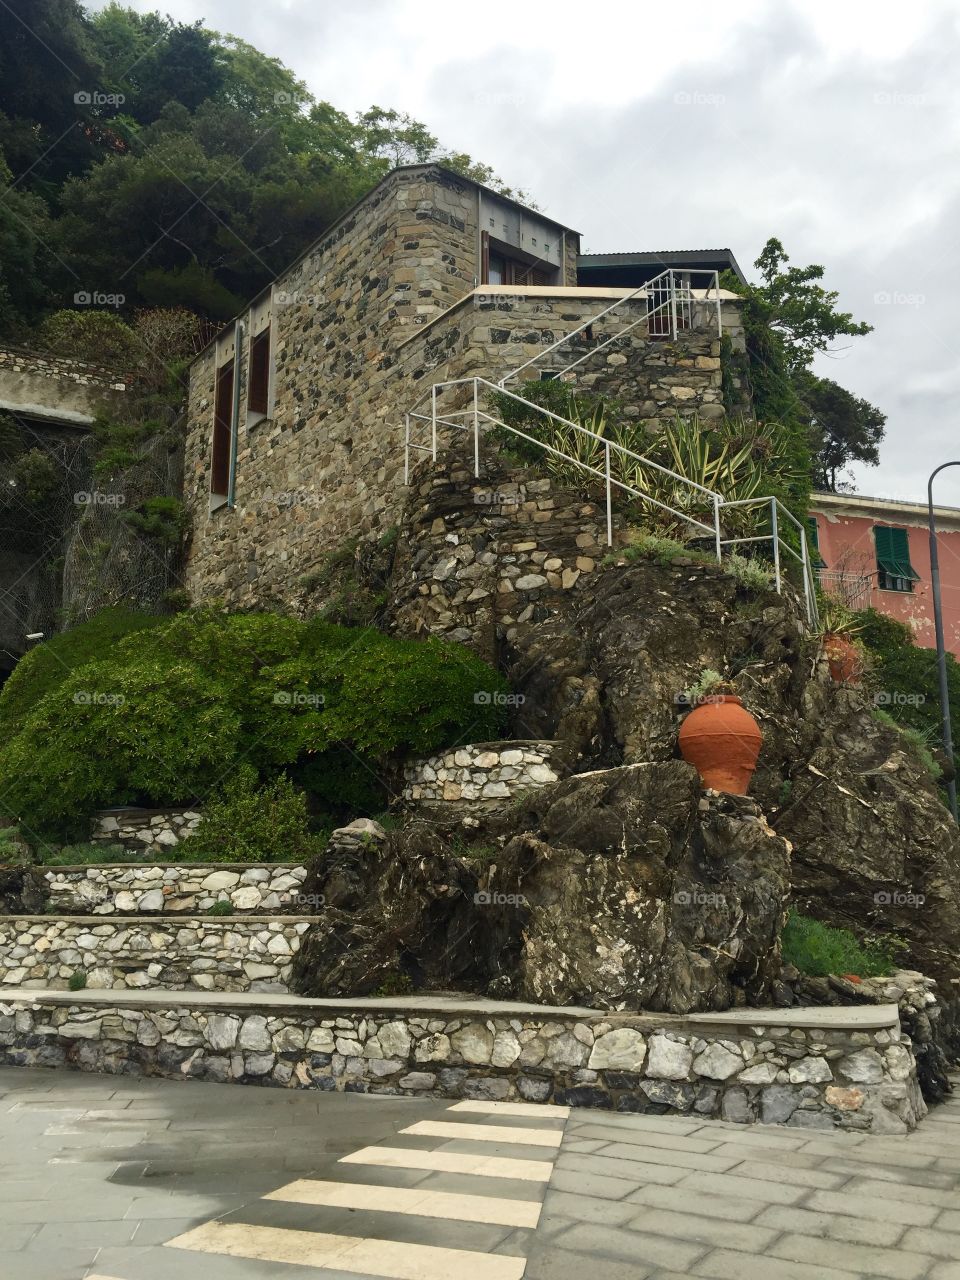 Cliff house: Positano, Italy 